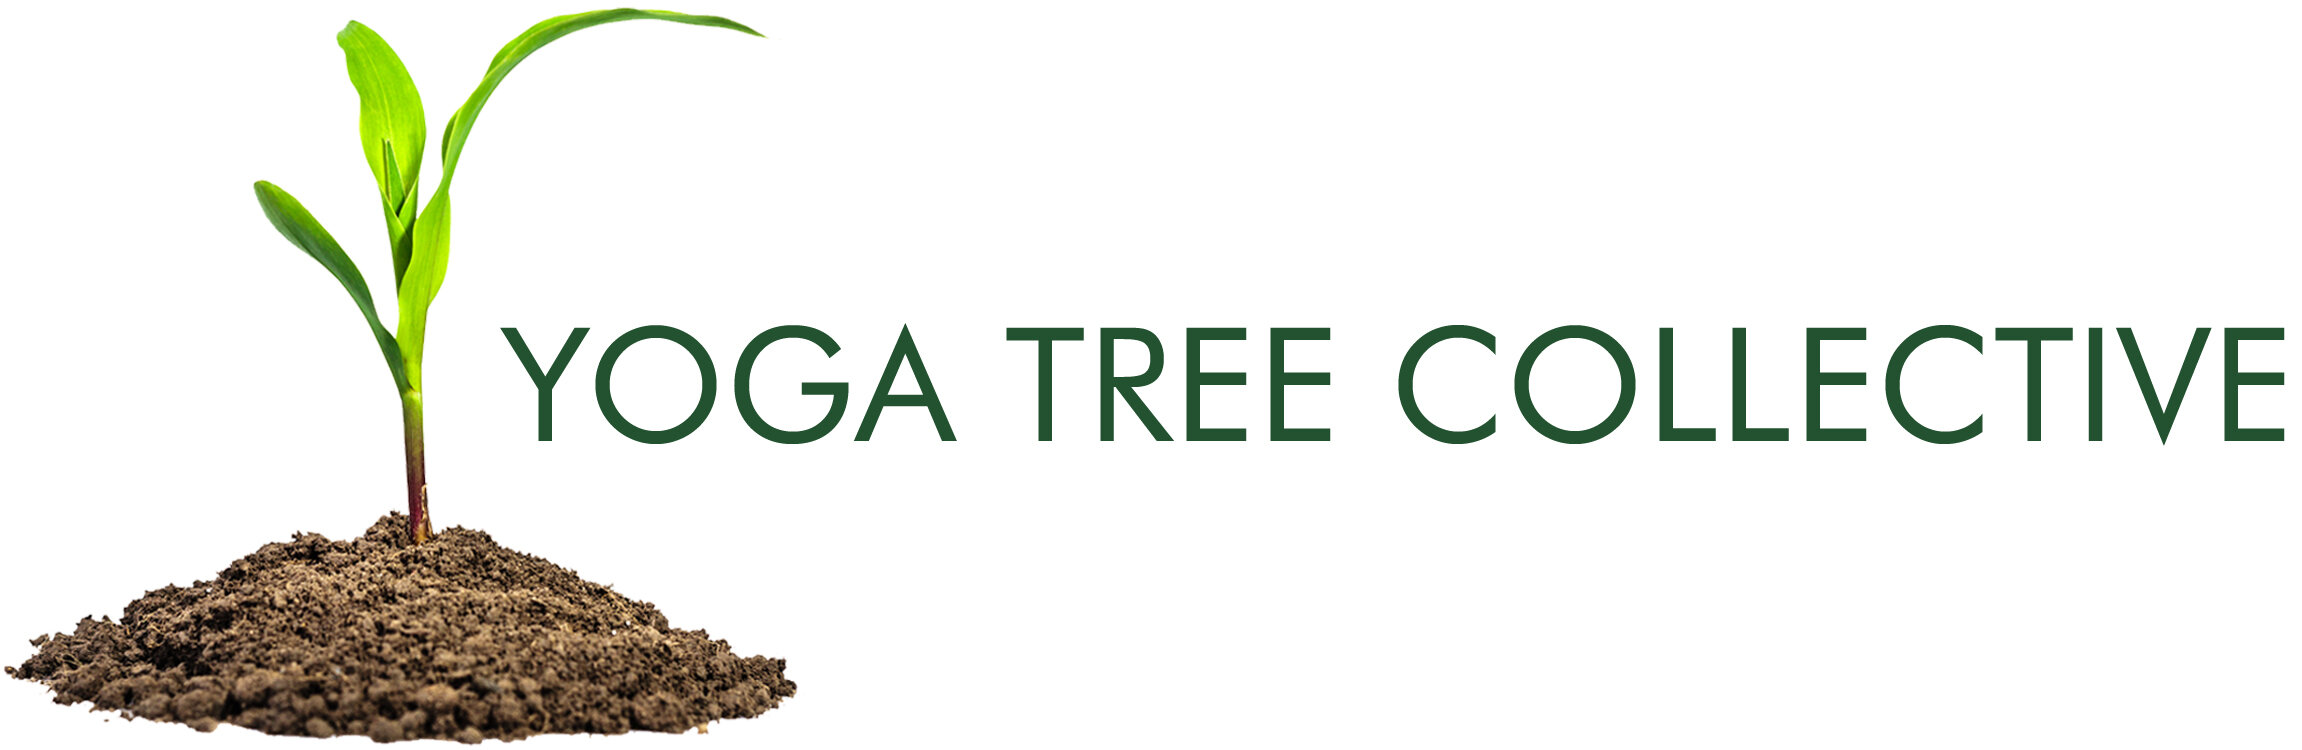 https://images.squarespace-cdn.com/content/v1/6052db9da8275330128f9cf3/1621615787852-OTKFS6BJ23RNC42S88DV/Yoga+Tree+Collective+Logo.jpg